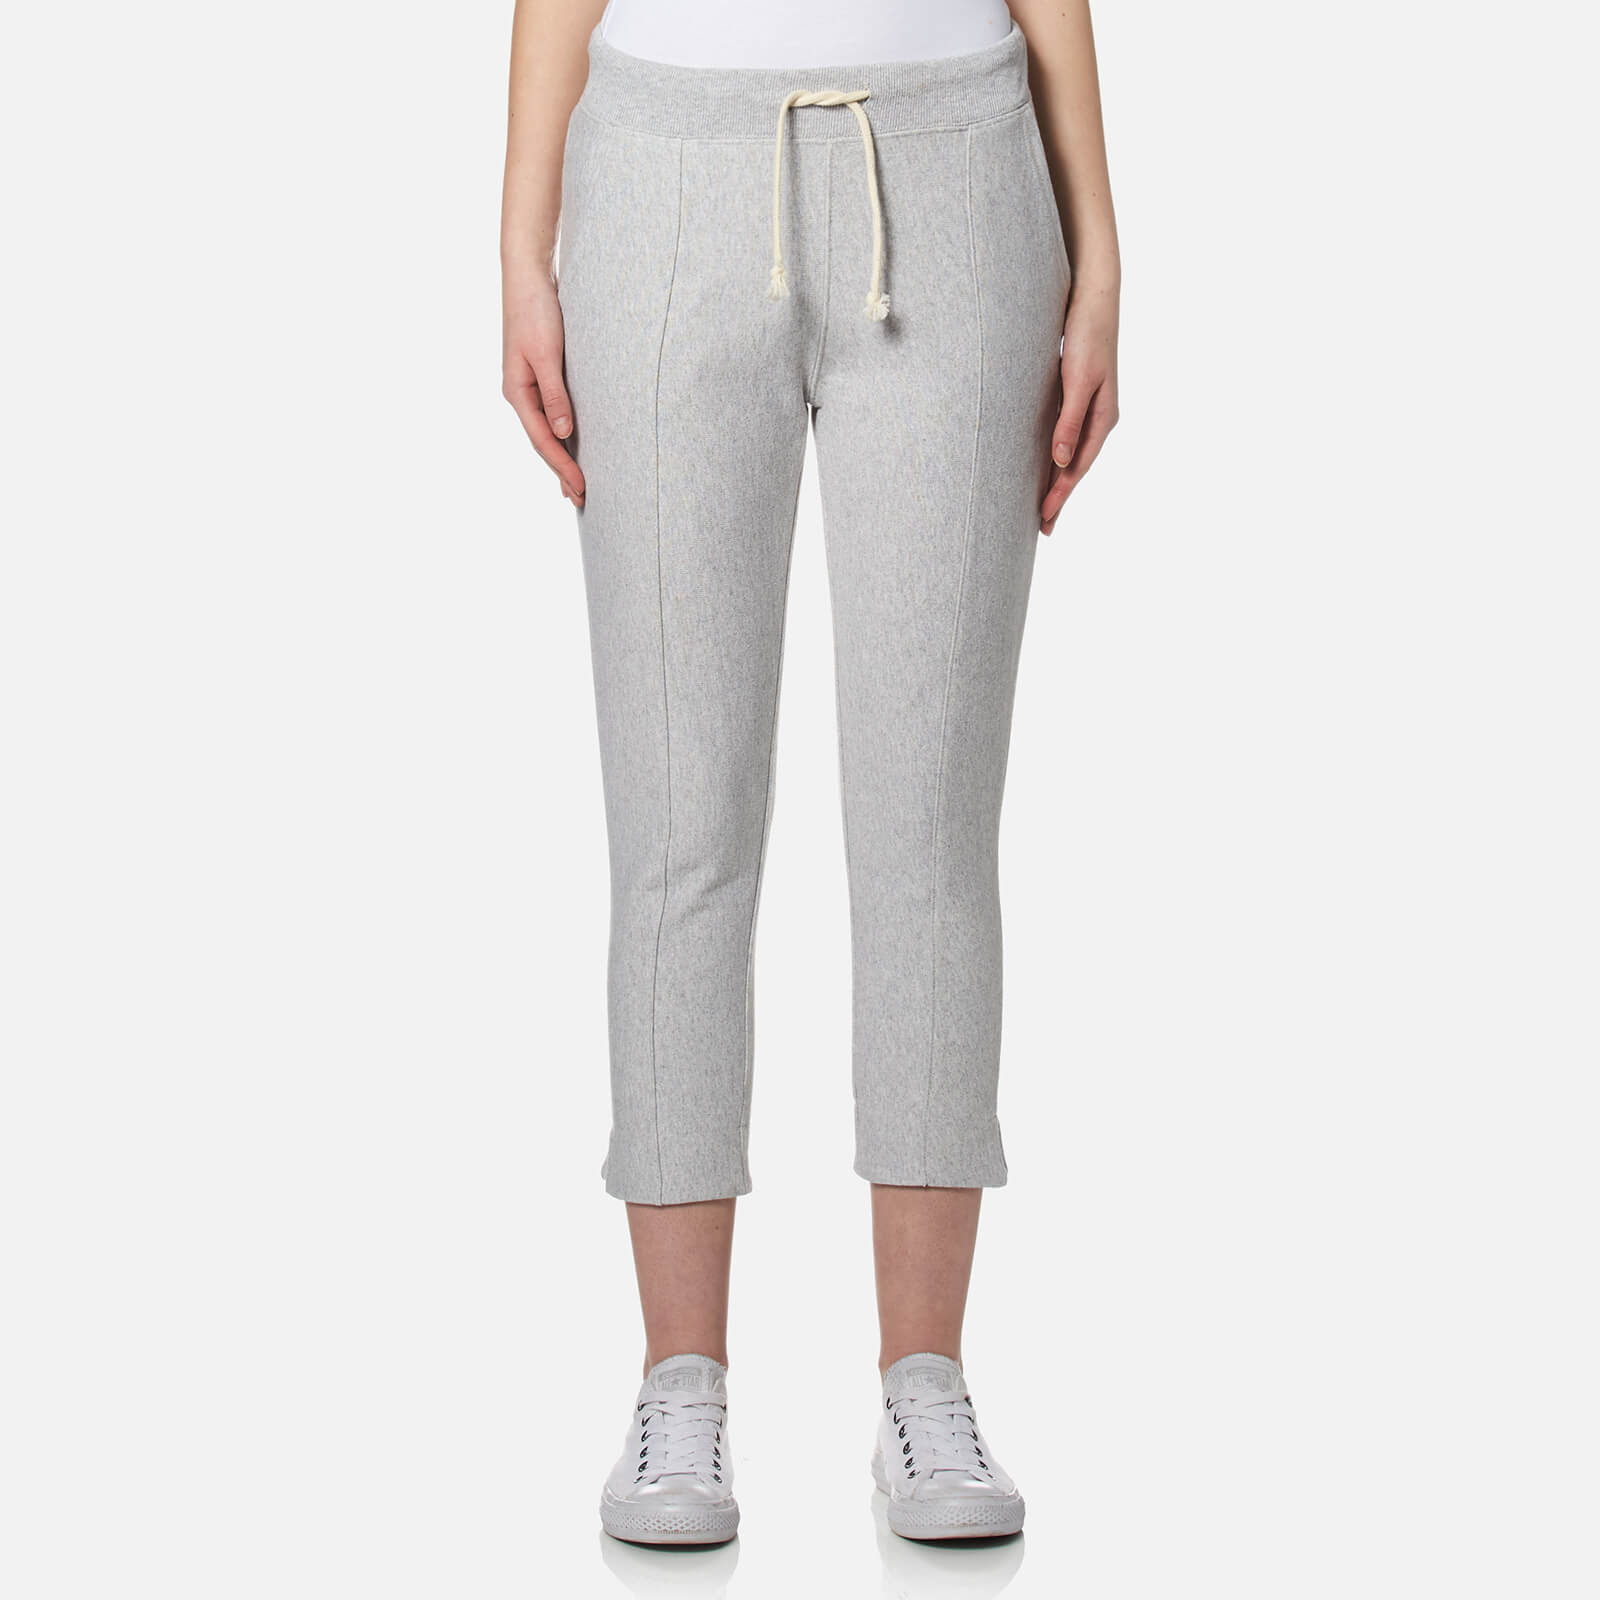 Champion Women's Crop Pants - Grey 